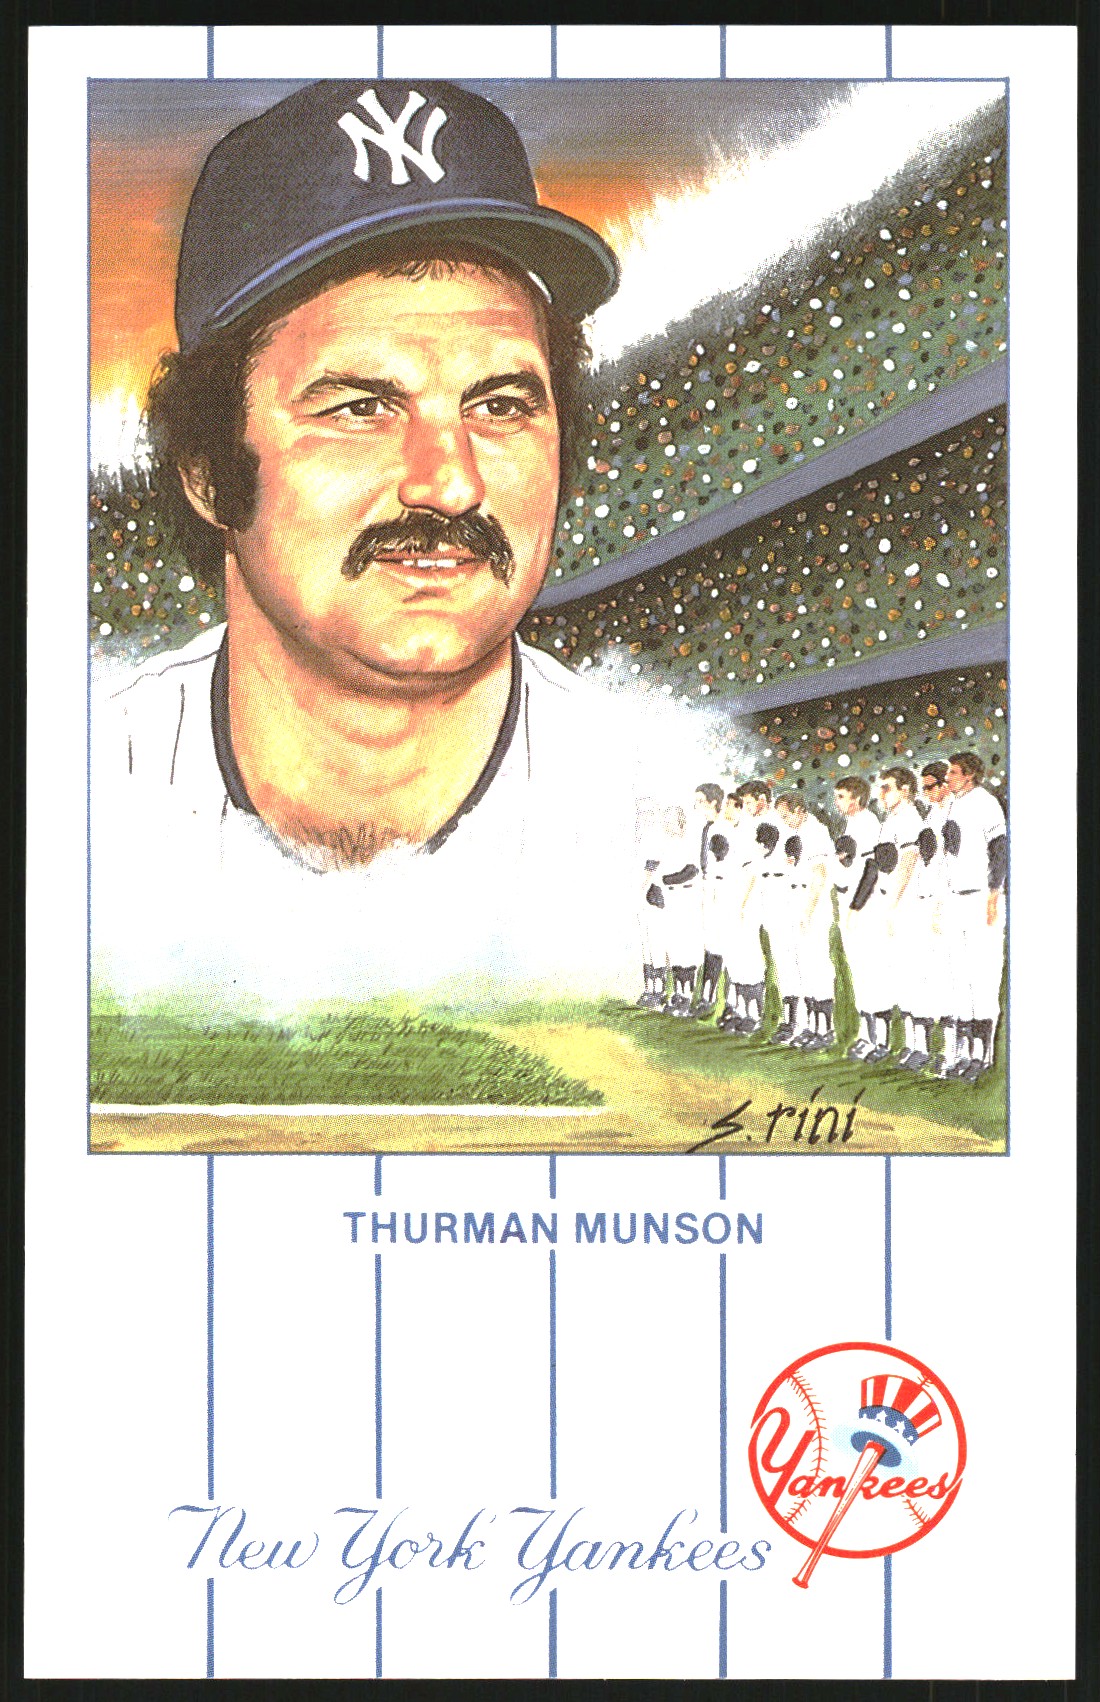 1990 Rini Postcards Munson #1 Thurman Munson/(Before a game)